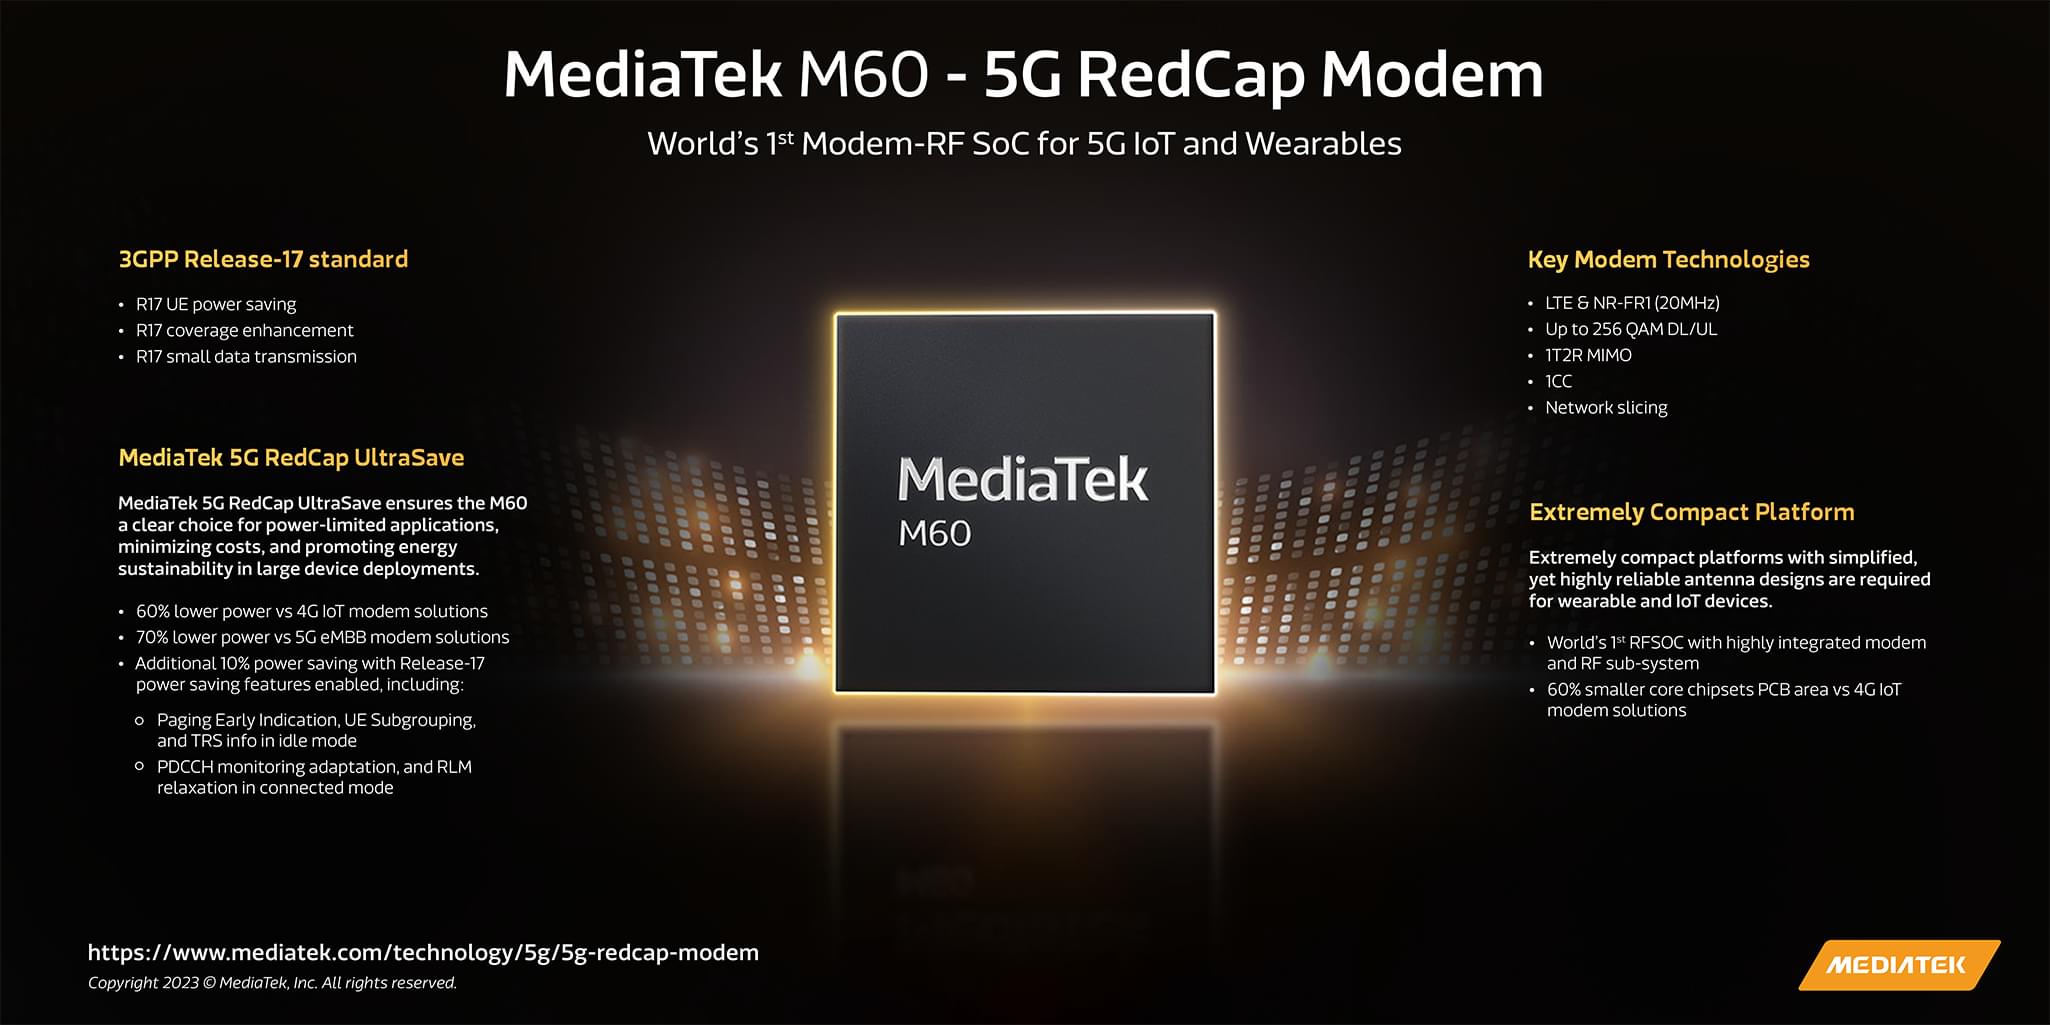 Infographic: MediaTek M60 RedCap Modem